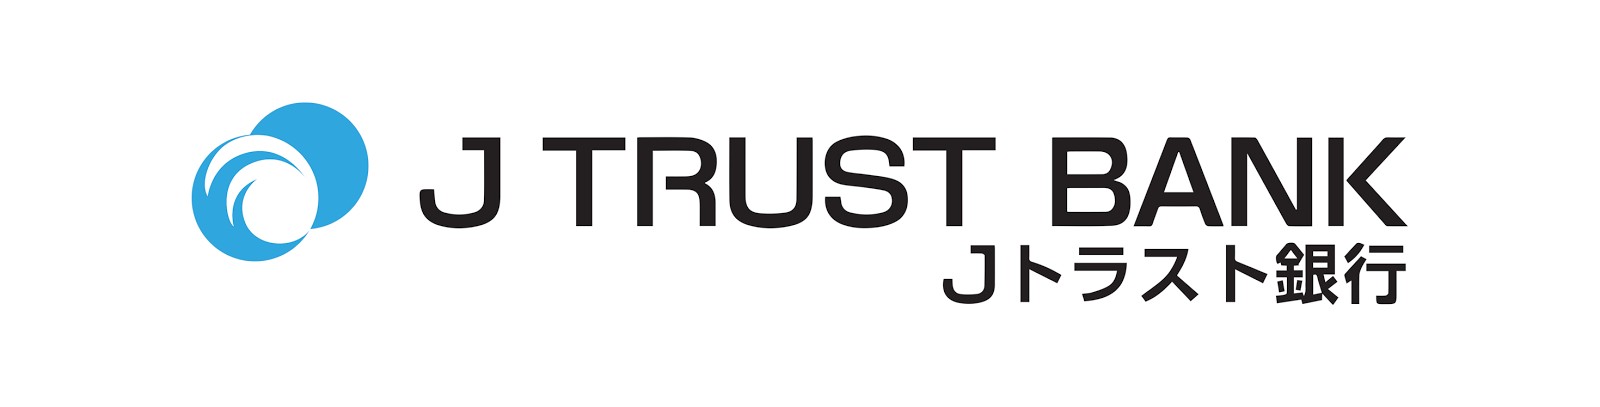 J Trust Bank Fixed Deposit